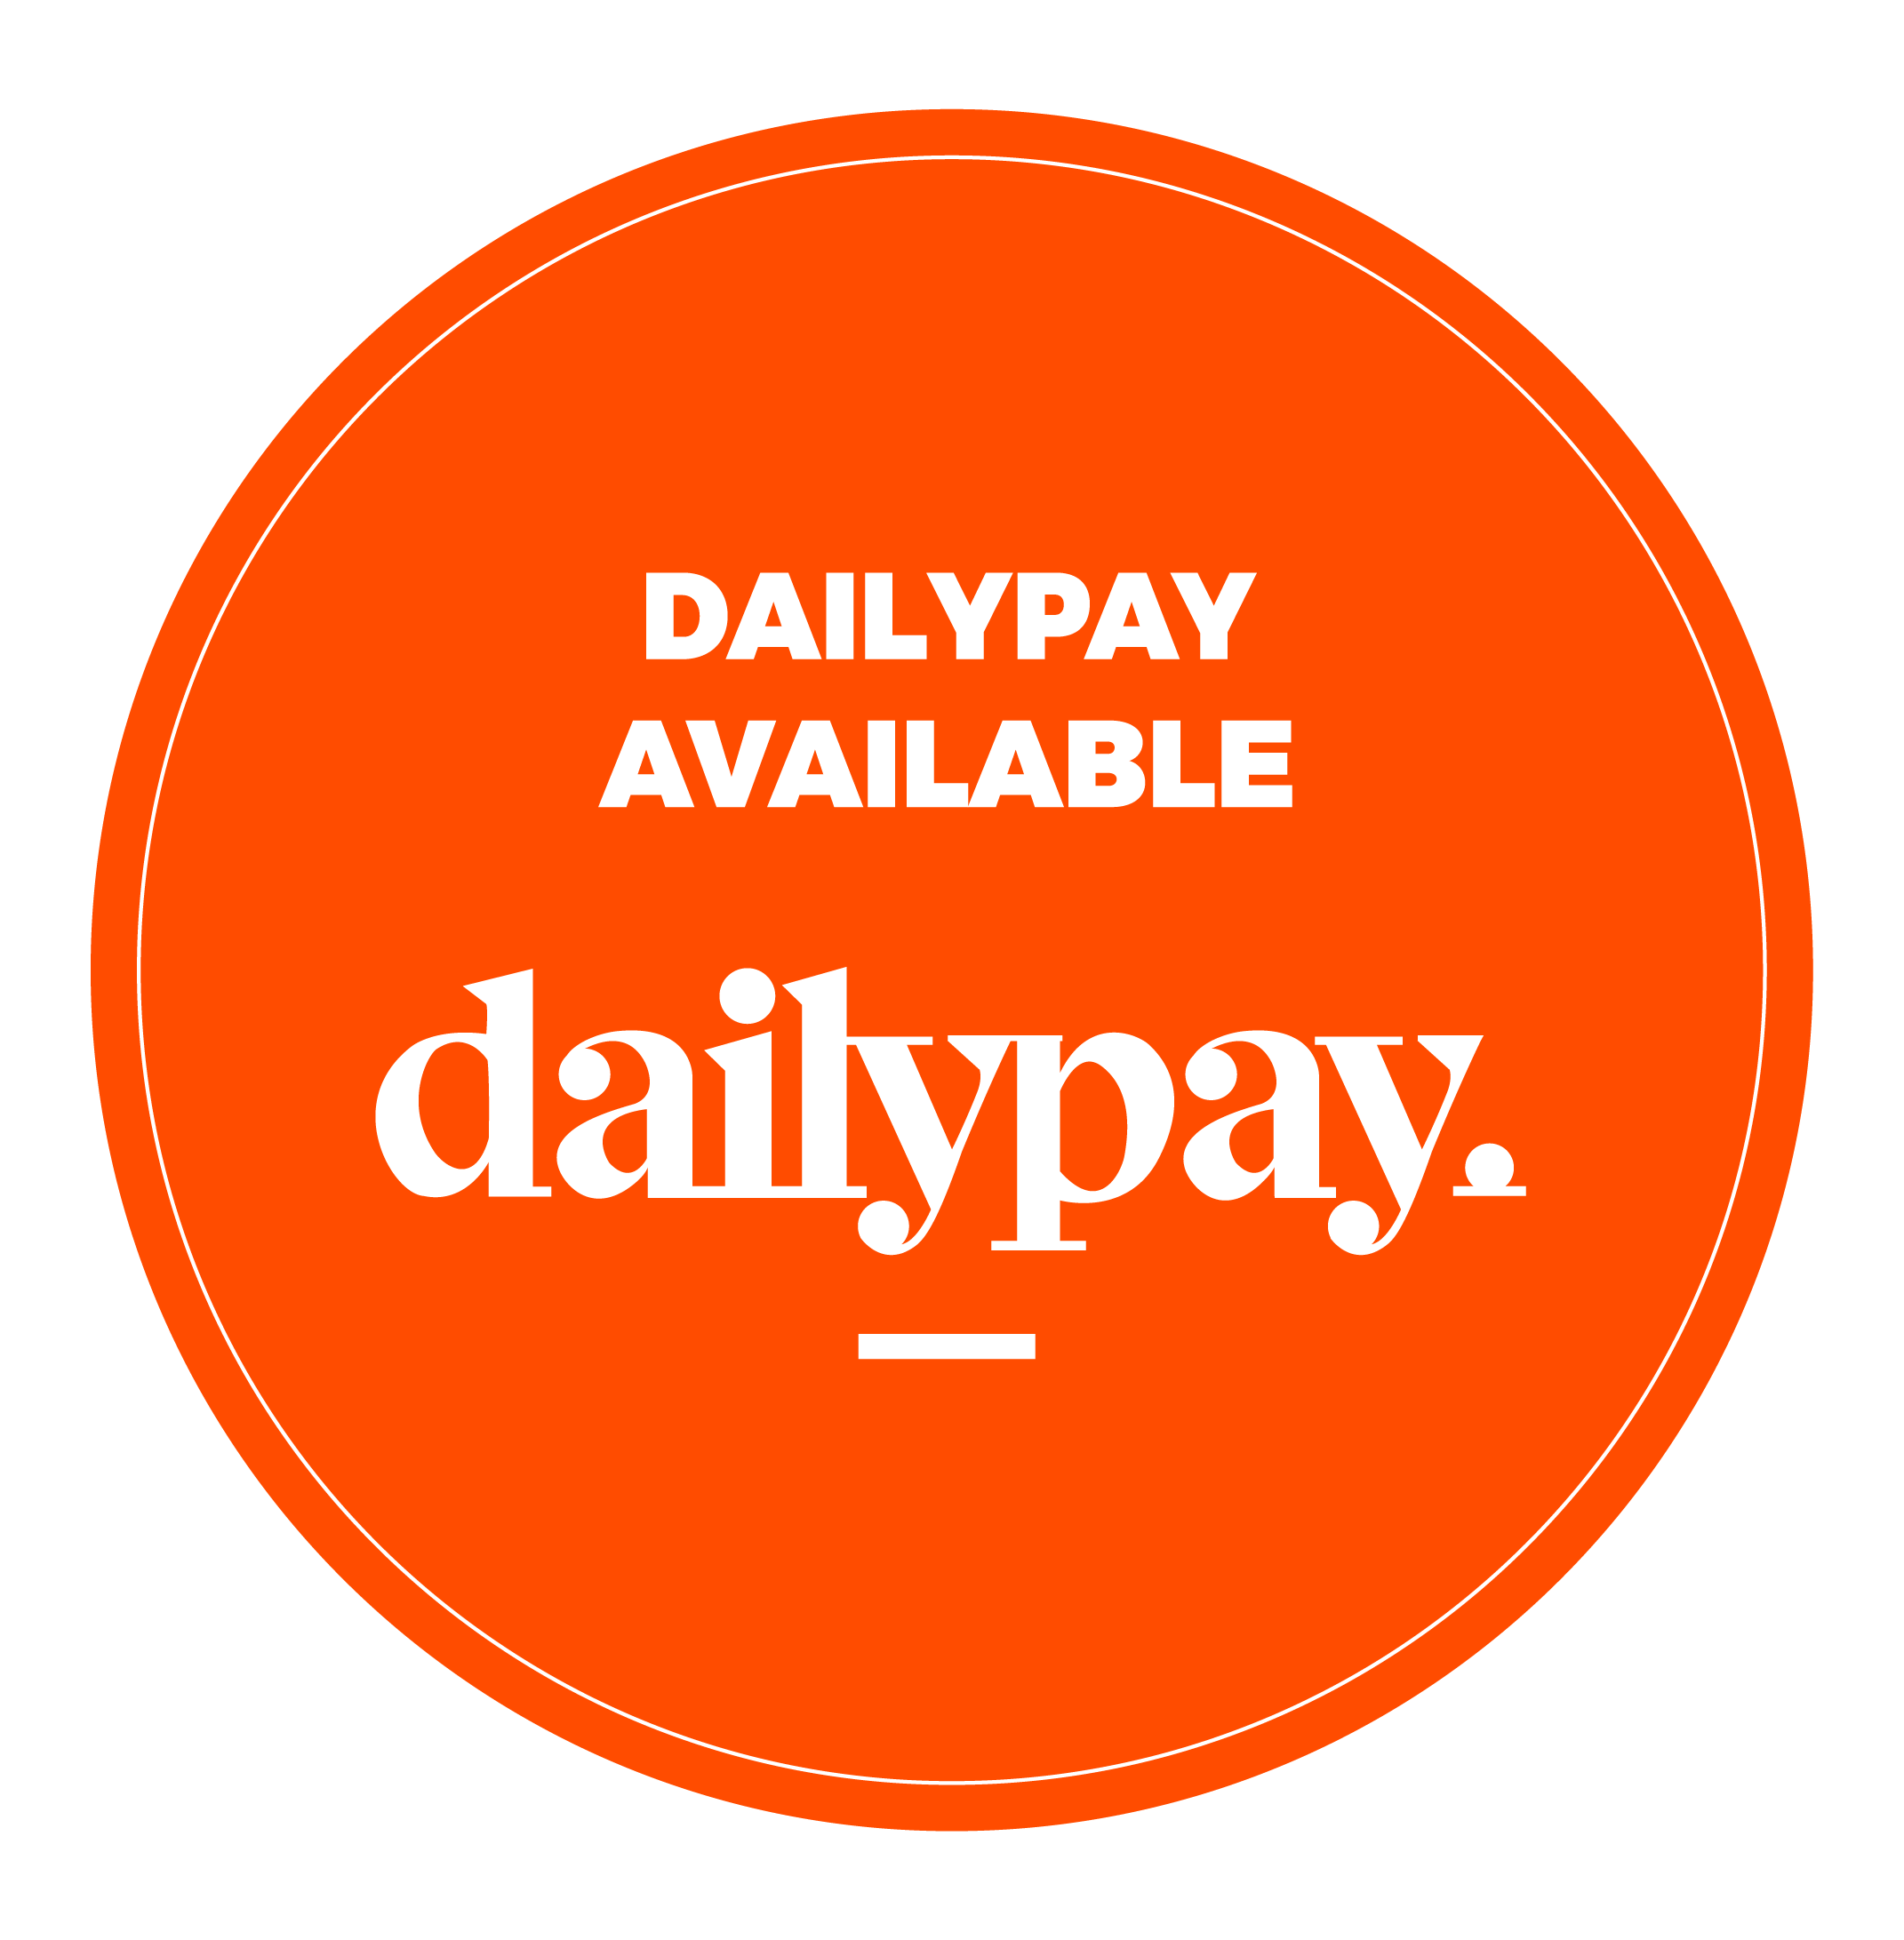 DailyPay Available